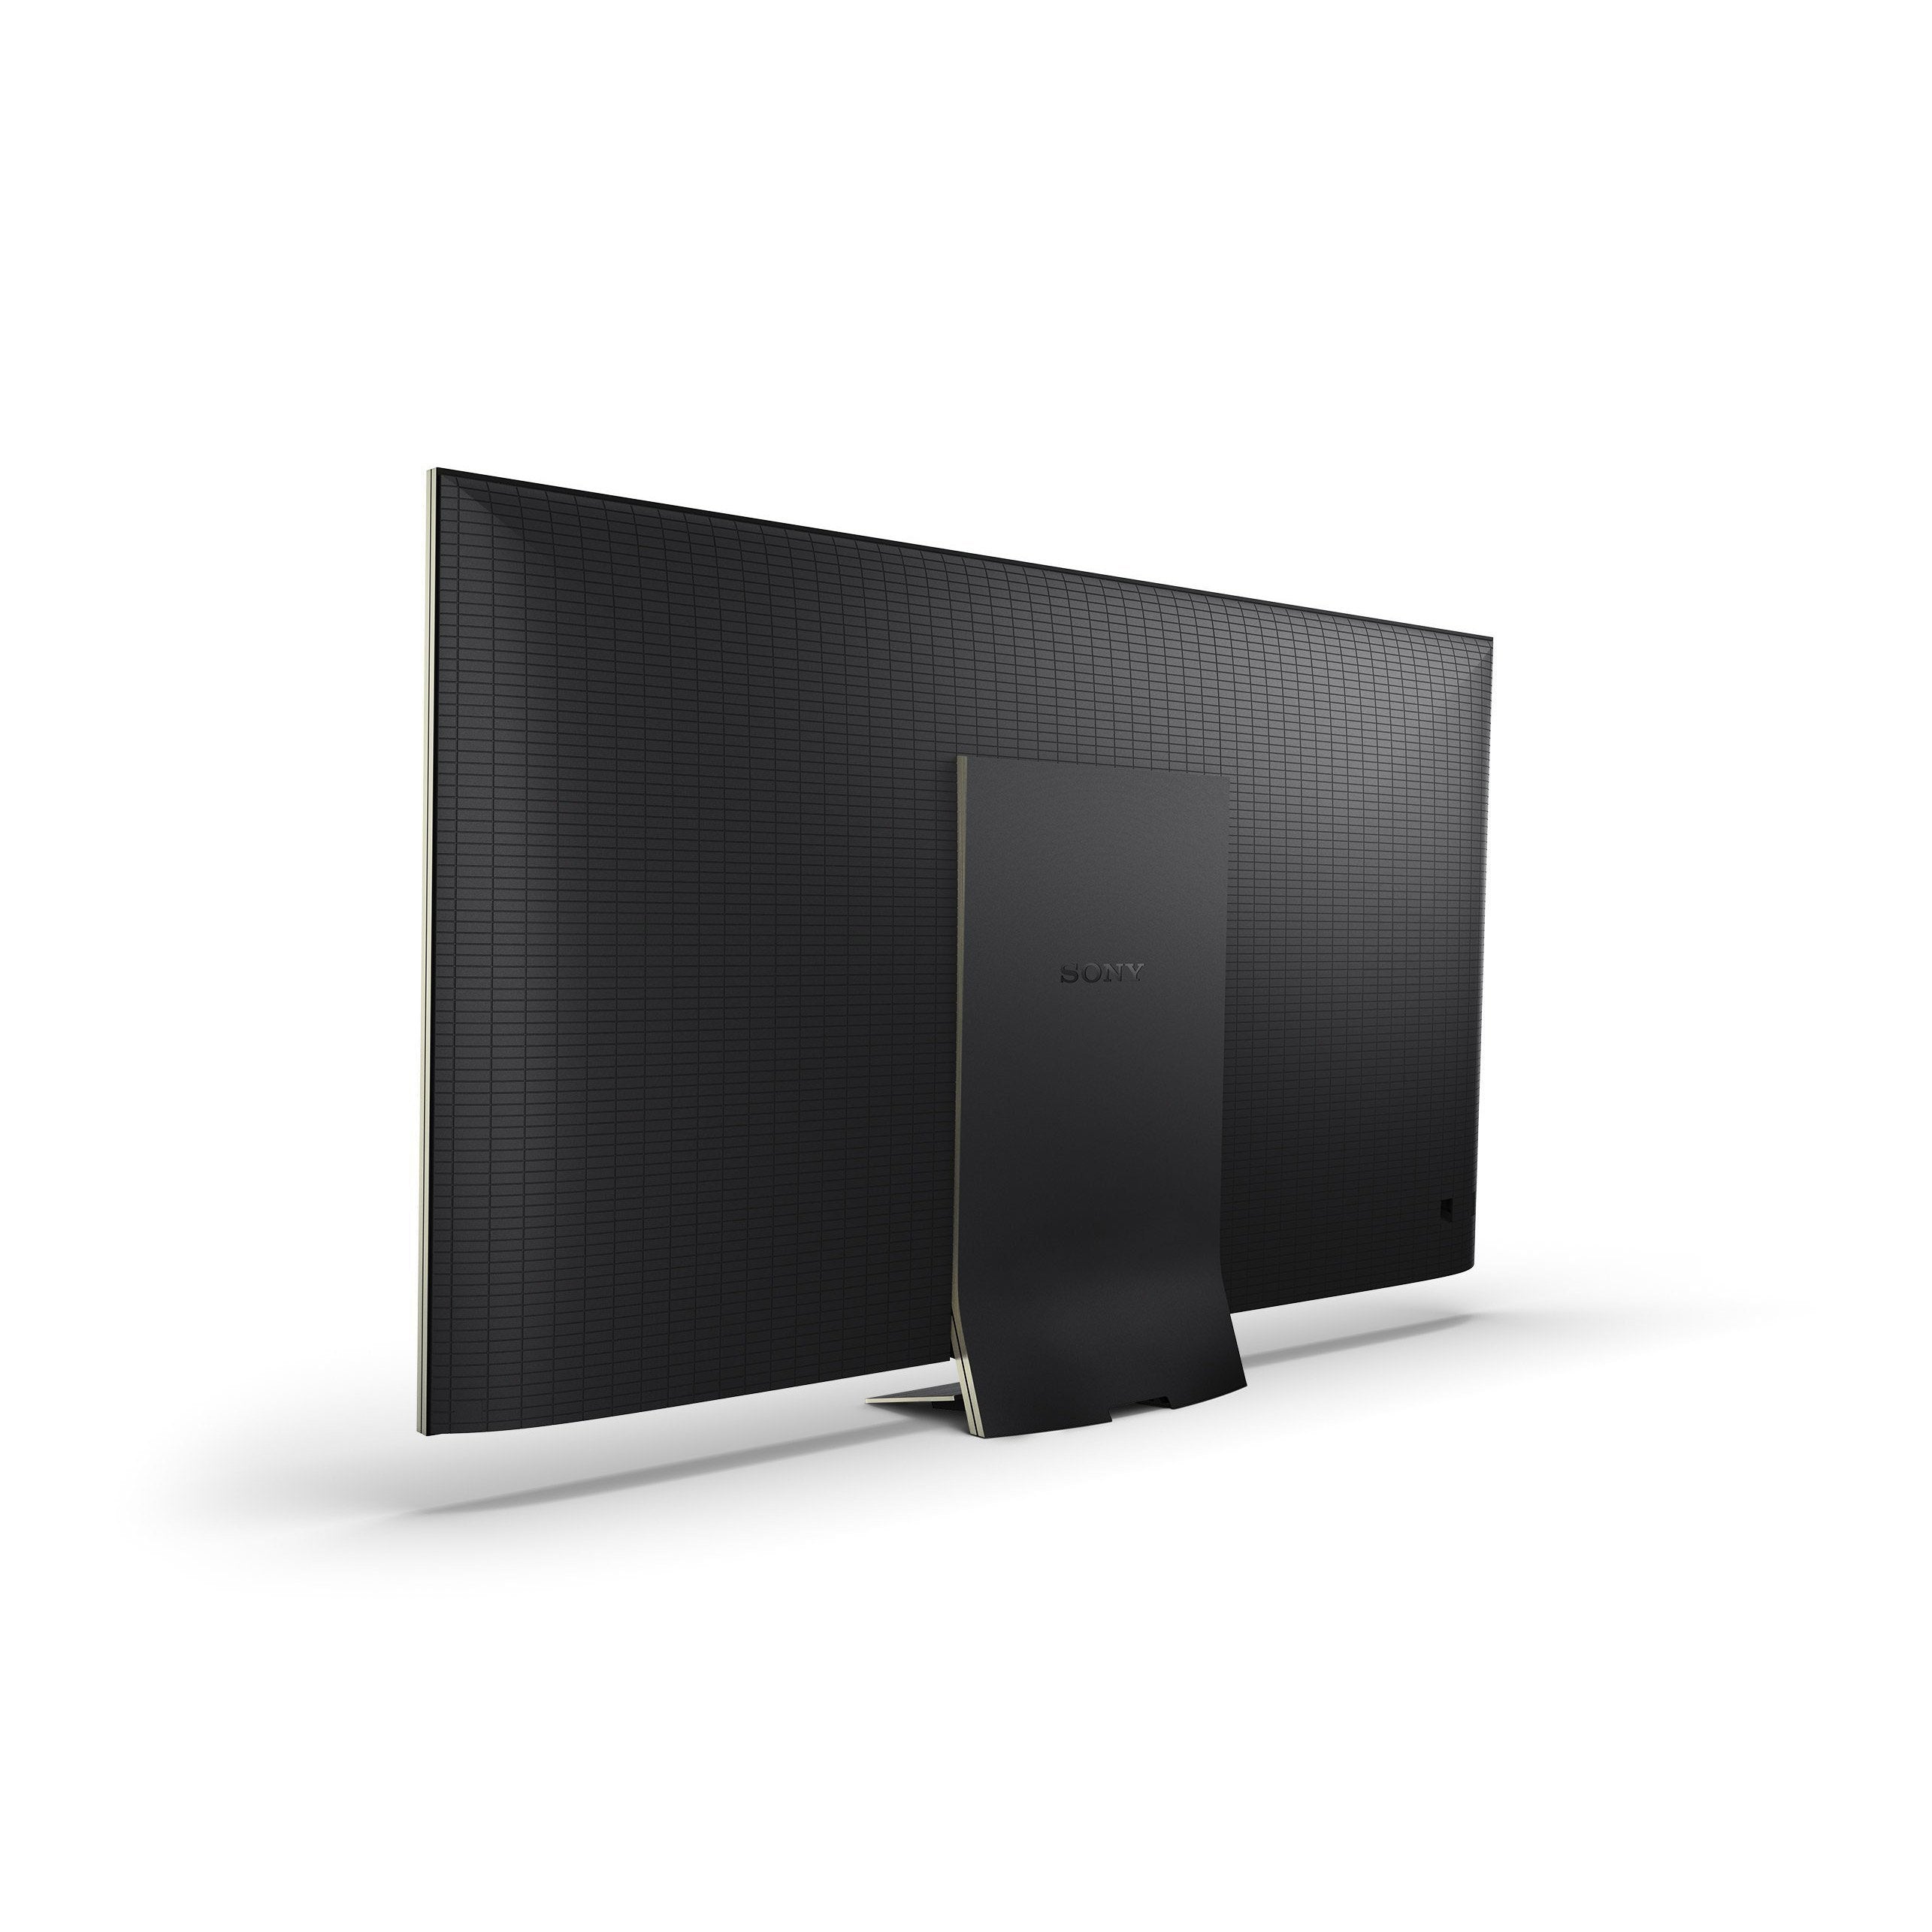 Sony XBR-75Z9D 75-Inch 4K HDR Ultra HD LED TV